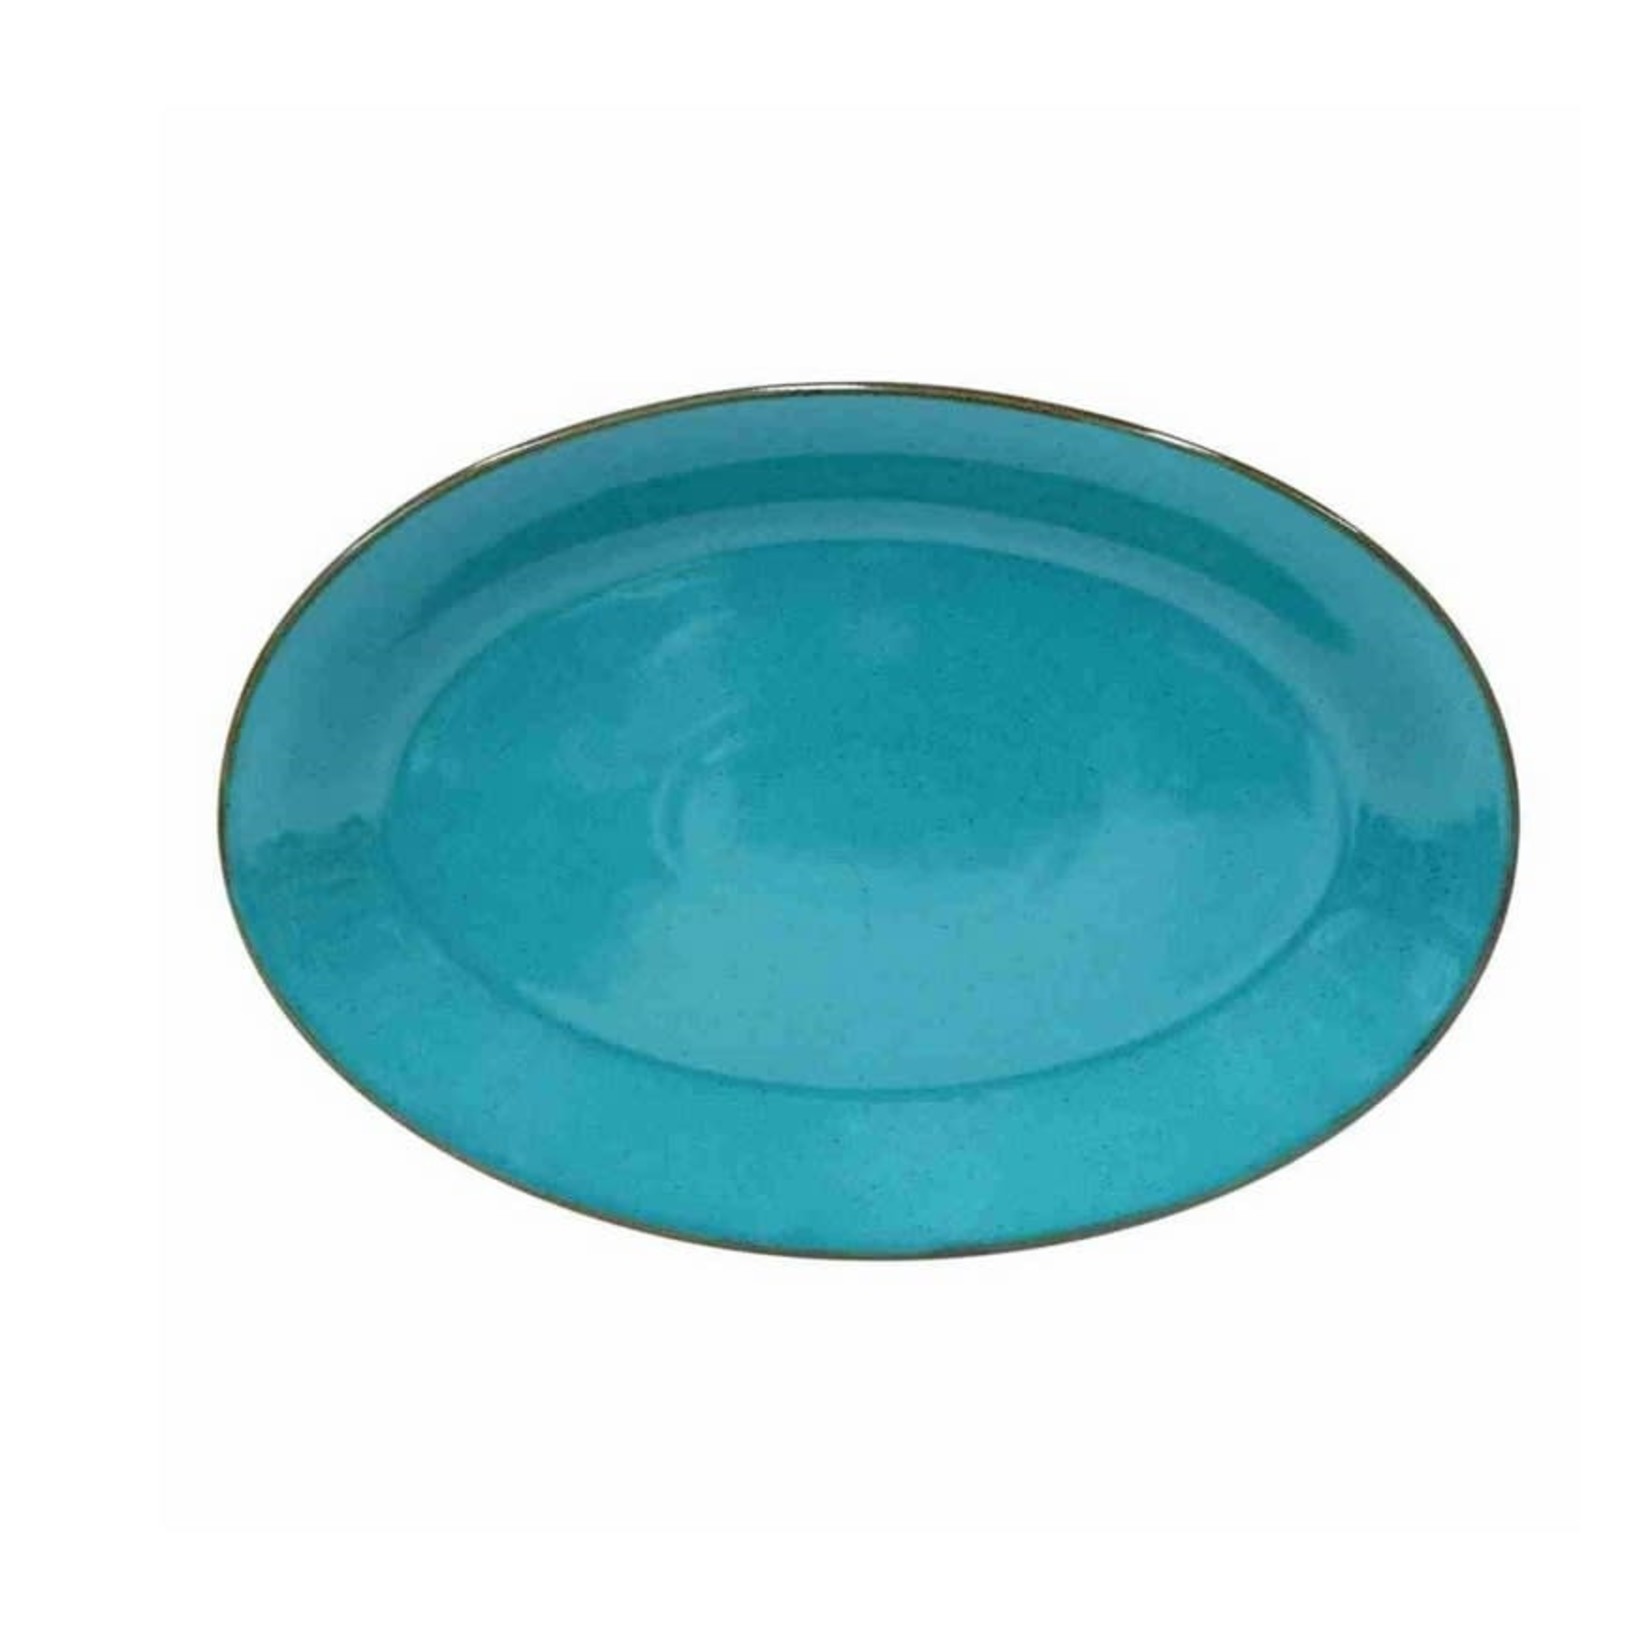 DAVID SHAW CASAFINA Sardegna Oval Platter - Blue